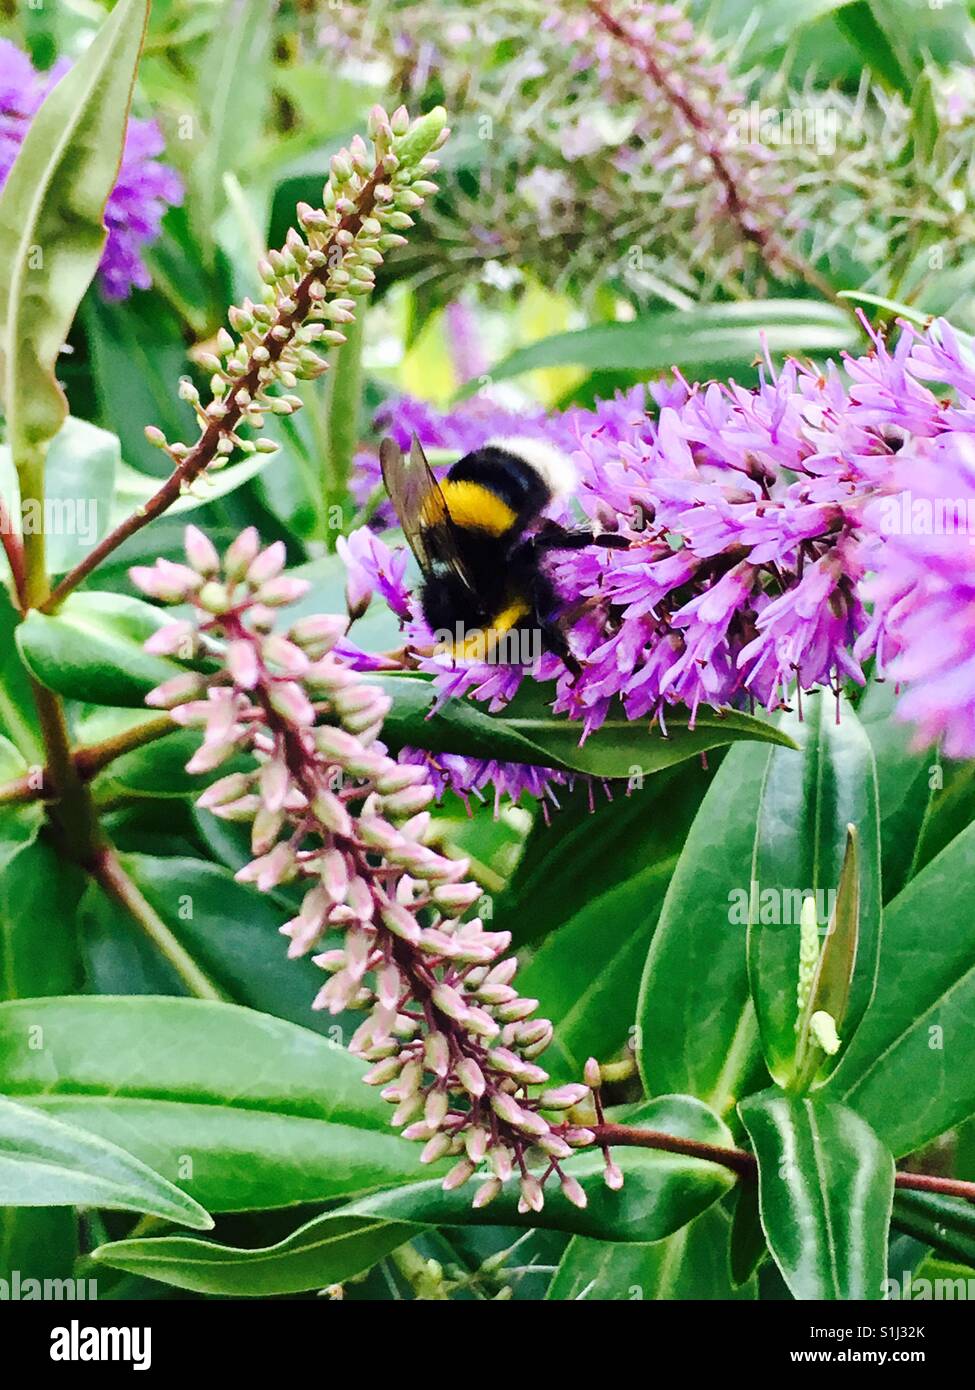 Bumblebee on purple flower Stock Photo